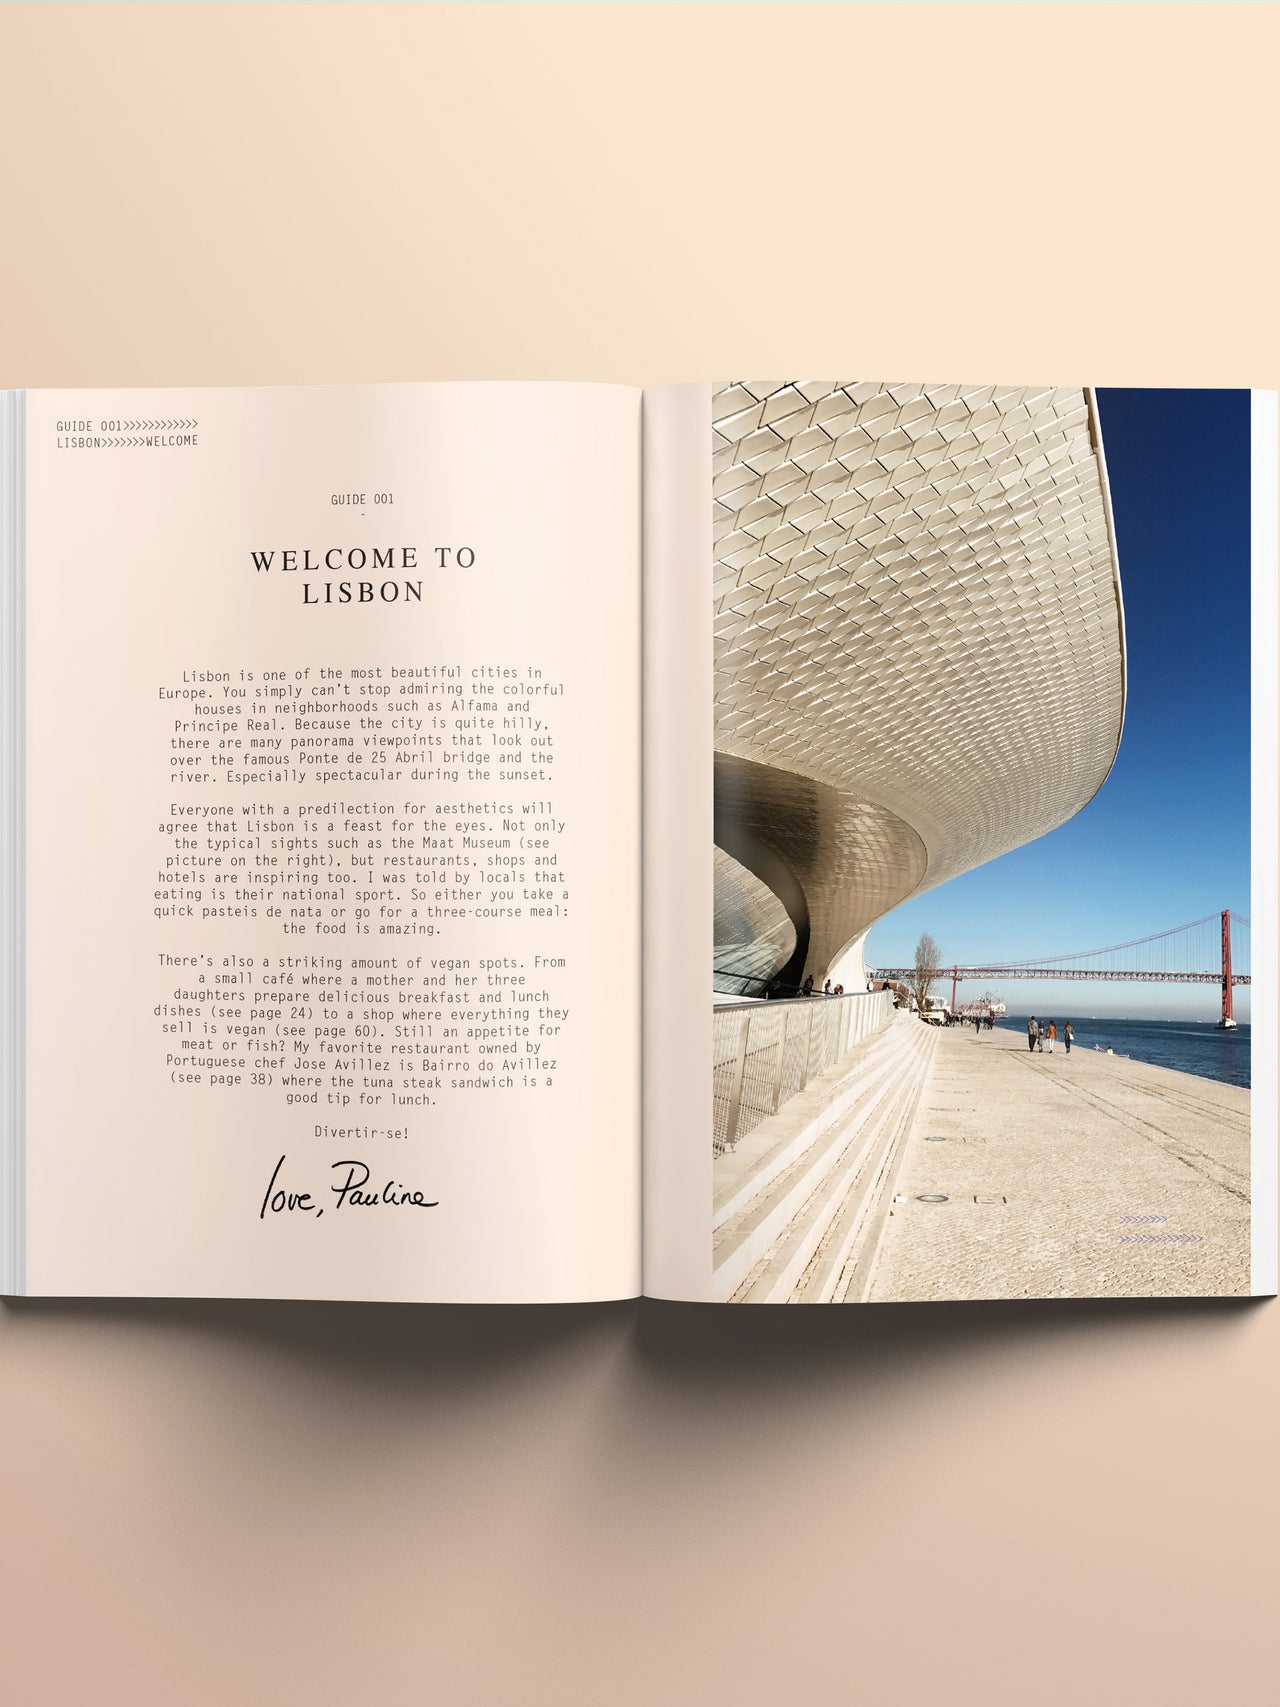 The Lisbonne Guide for Petite Passport